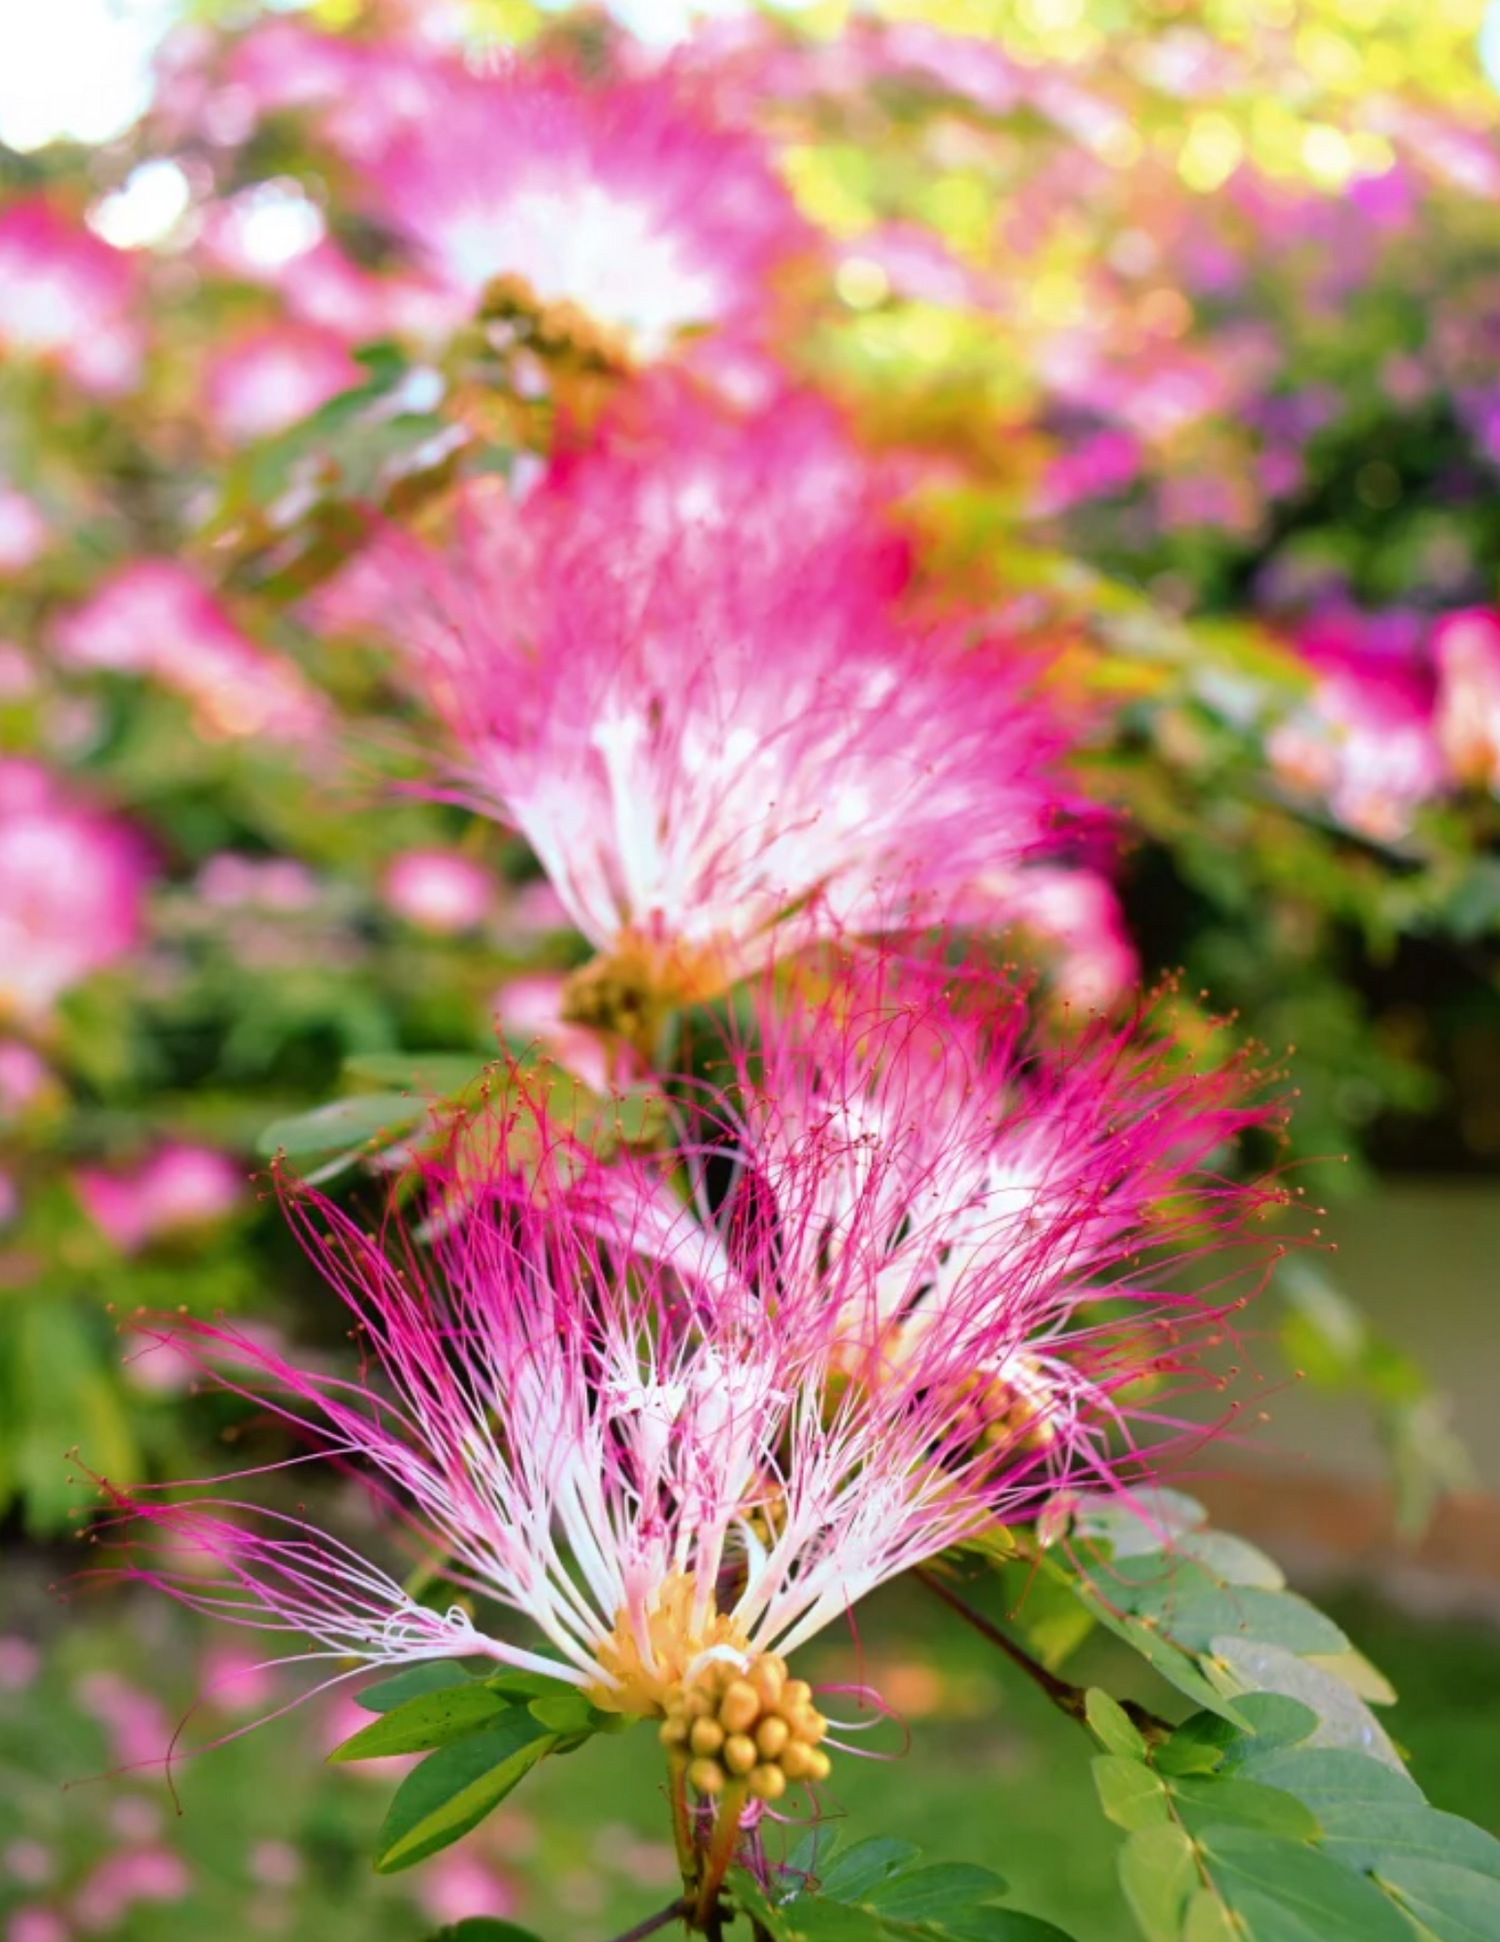 Bobinsana - Powderpuff plant in bloom